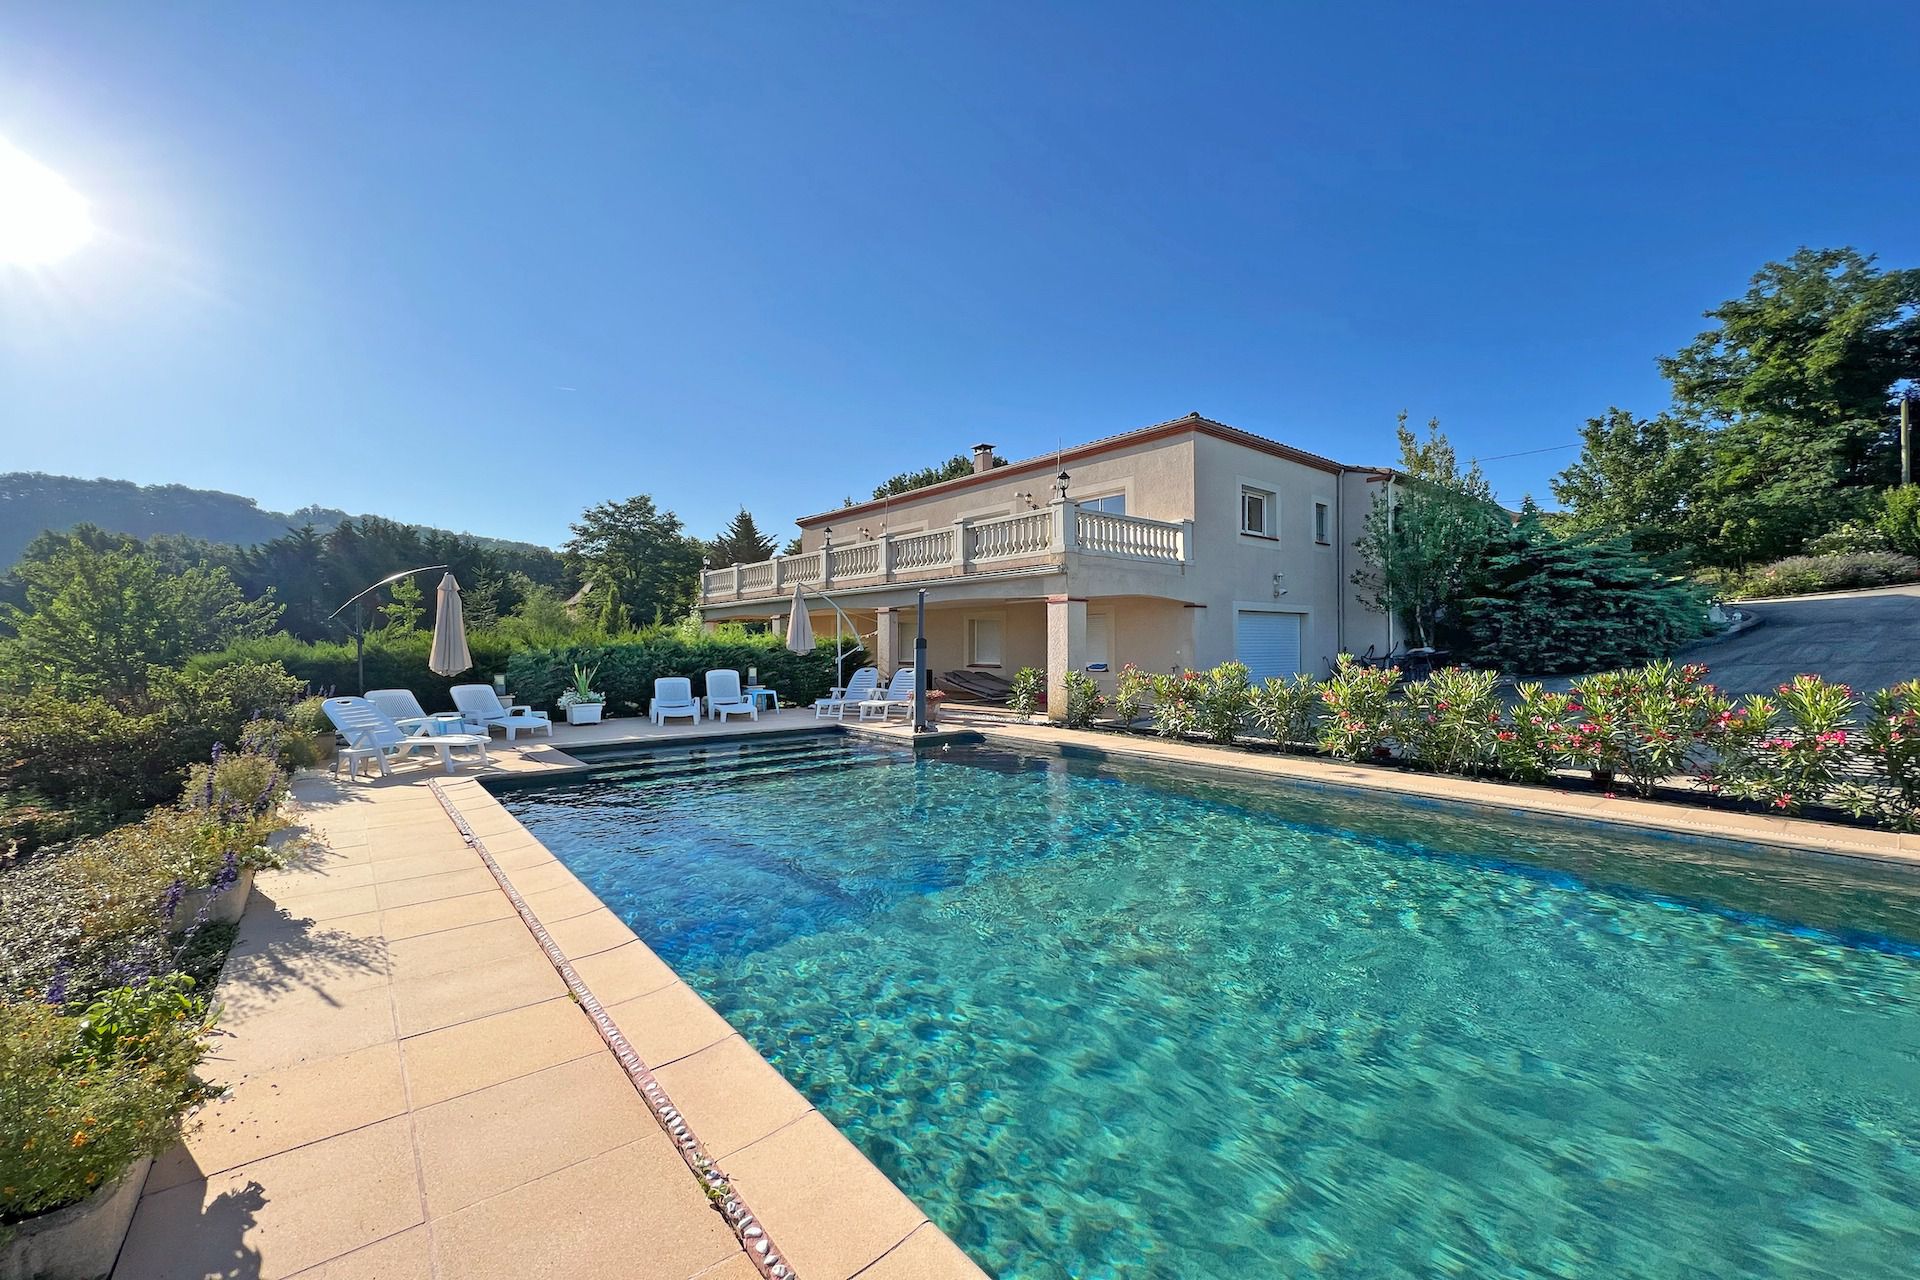 Méditerranée Location Villa with Private pool in Ste-Livrade sur Lot, Provence